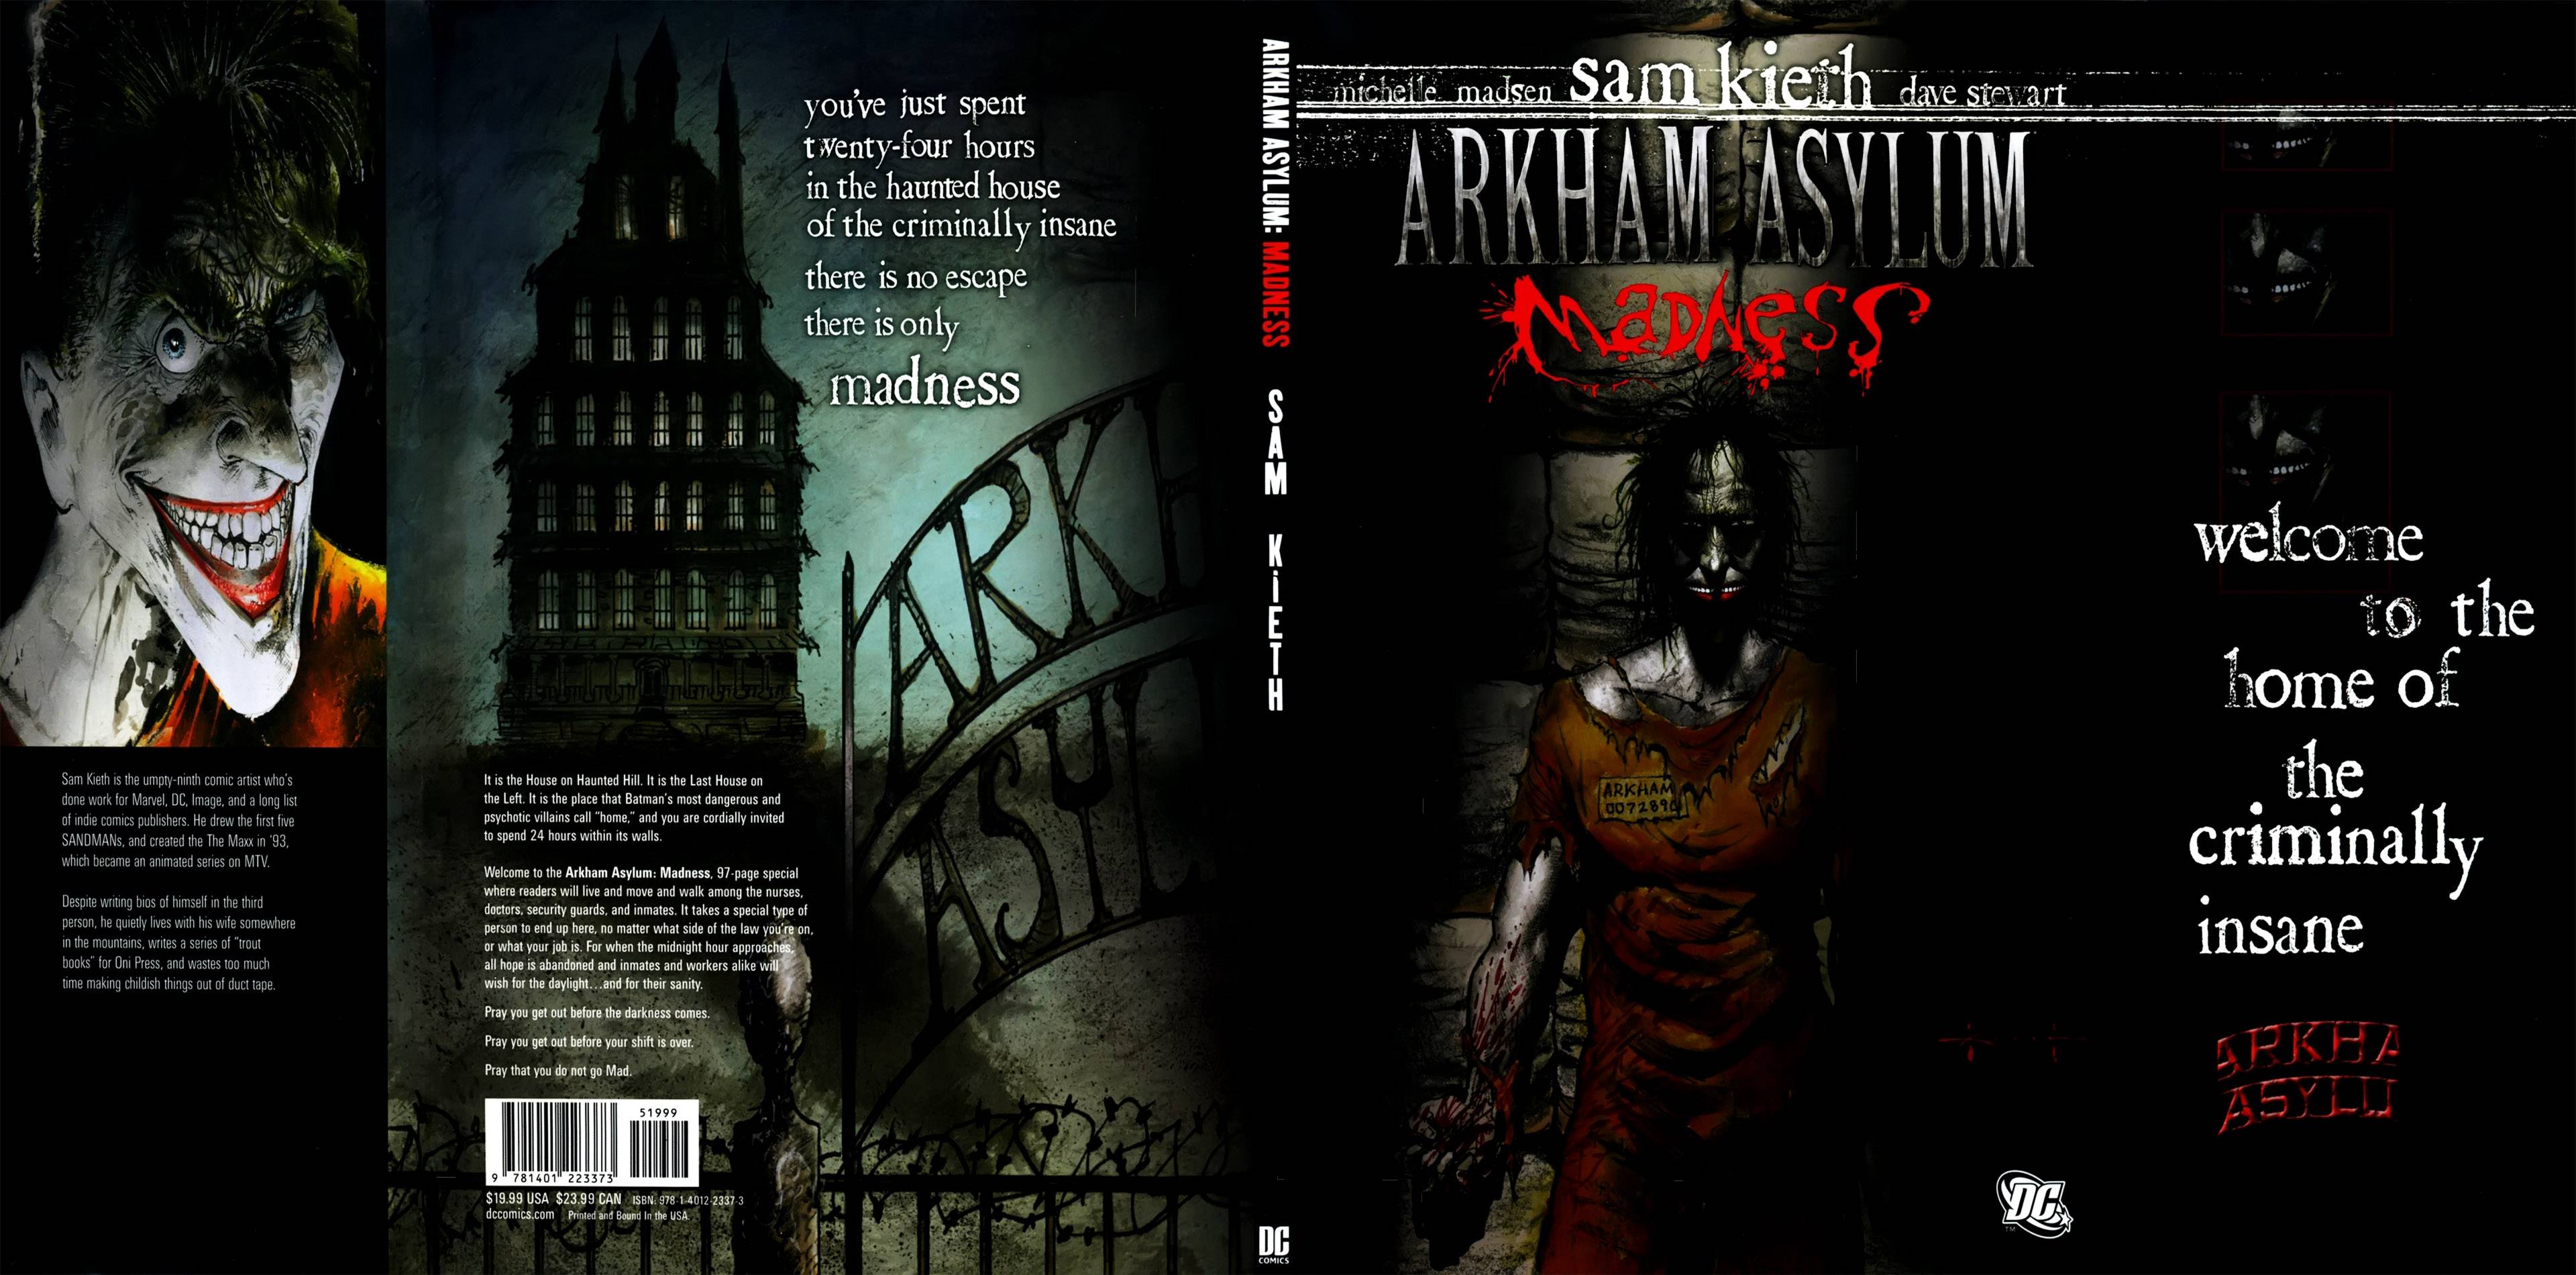 Arkham Asylum: Madness Pics, Comics Collection